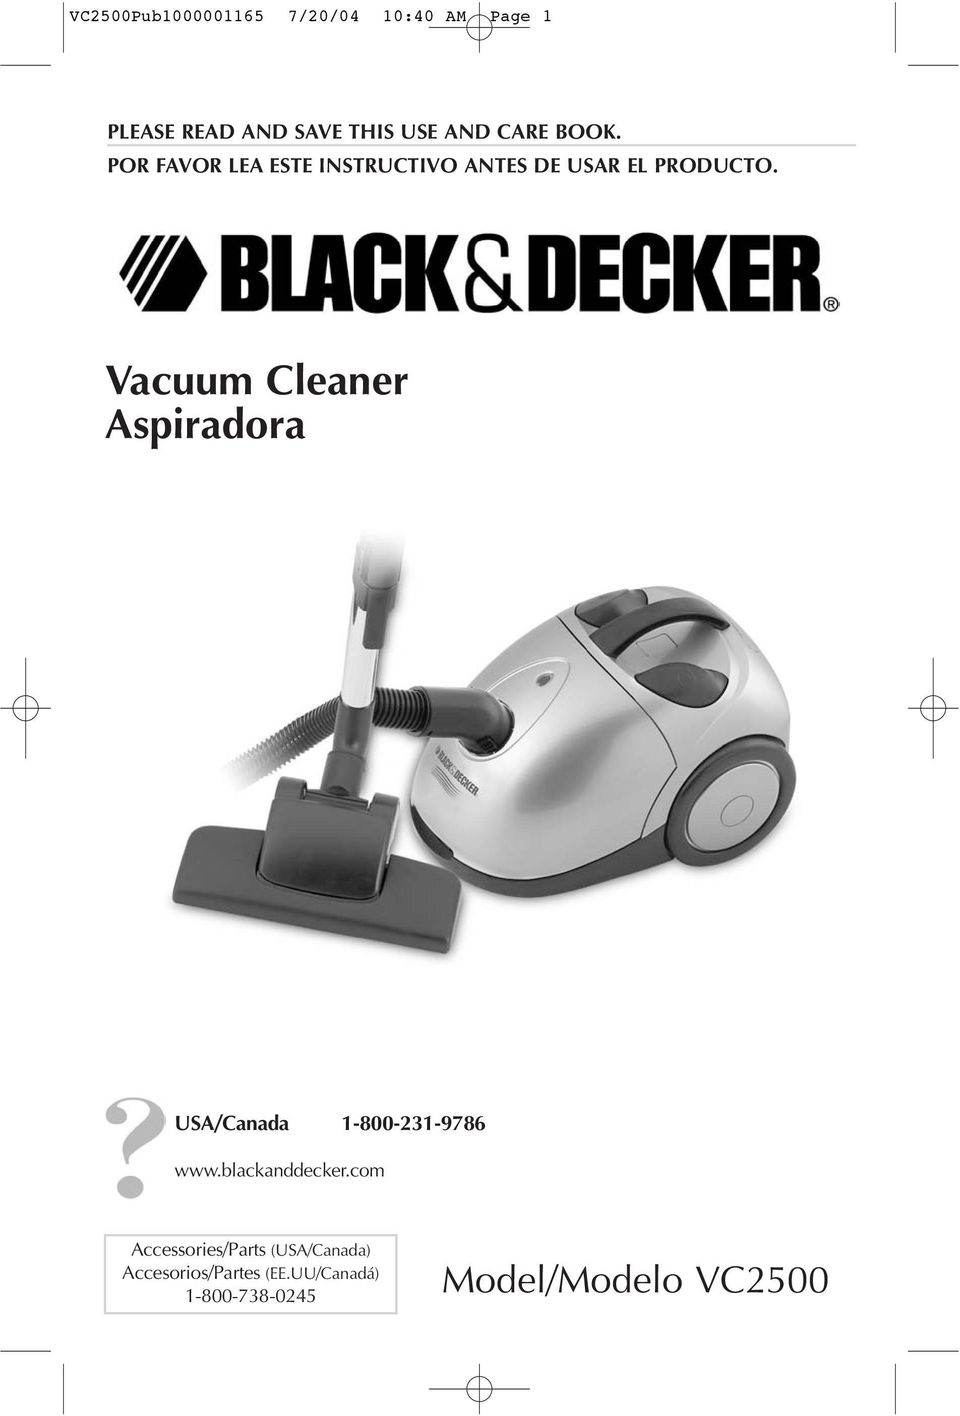 Vacuum Cleaner Aspiradora USA/Canada 1-800-231-9786 www.blackanddecker.